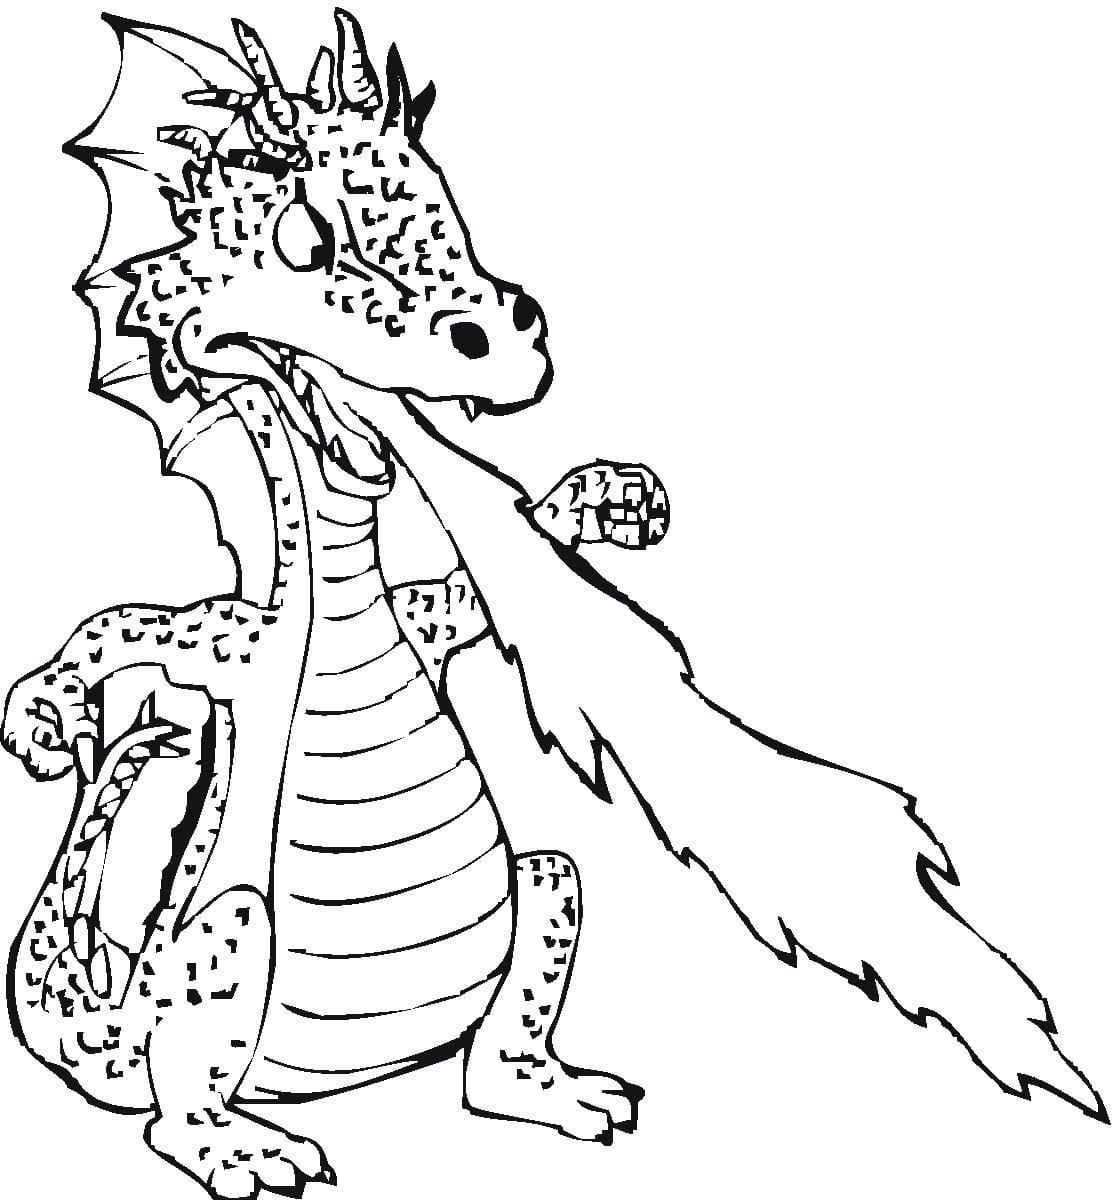 Dragon Attaque coloring page